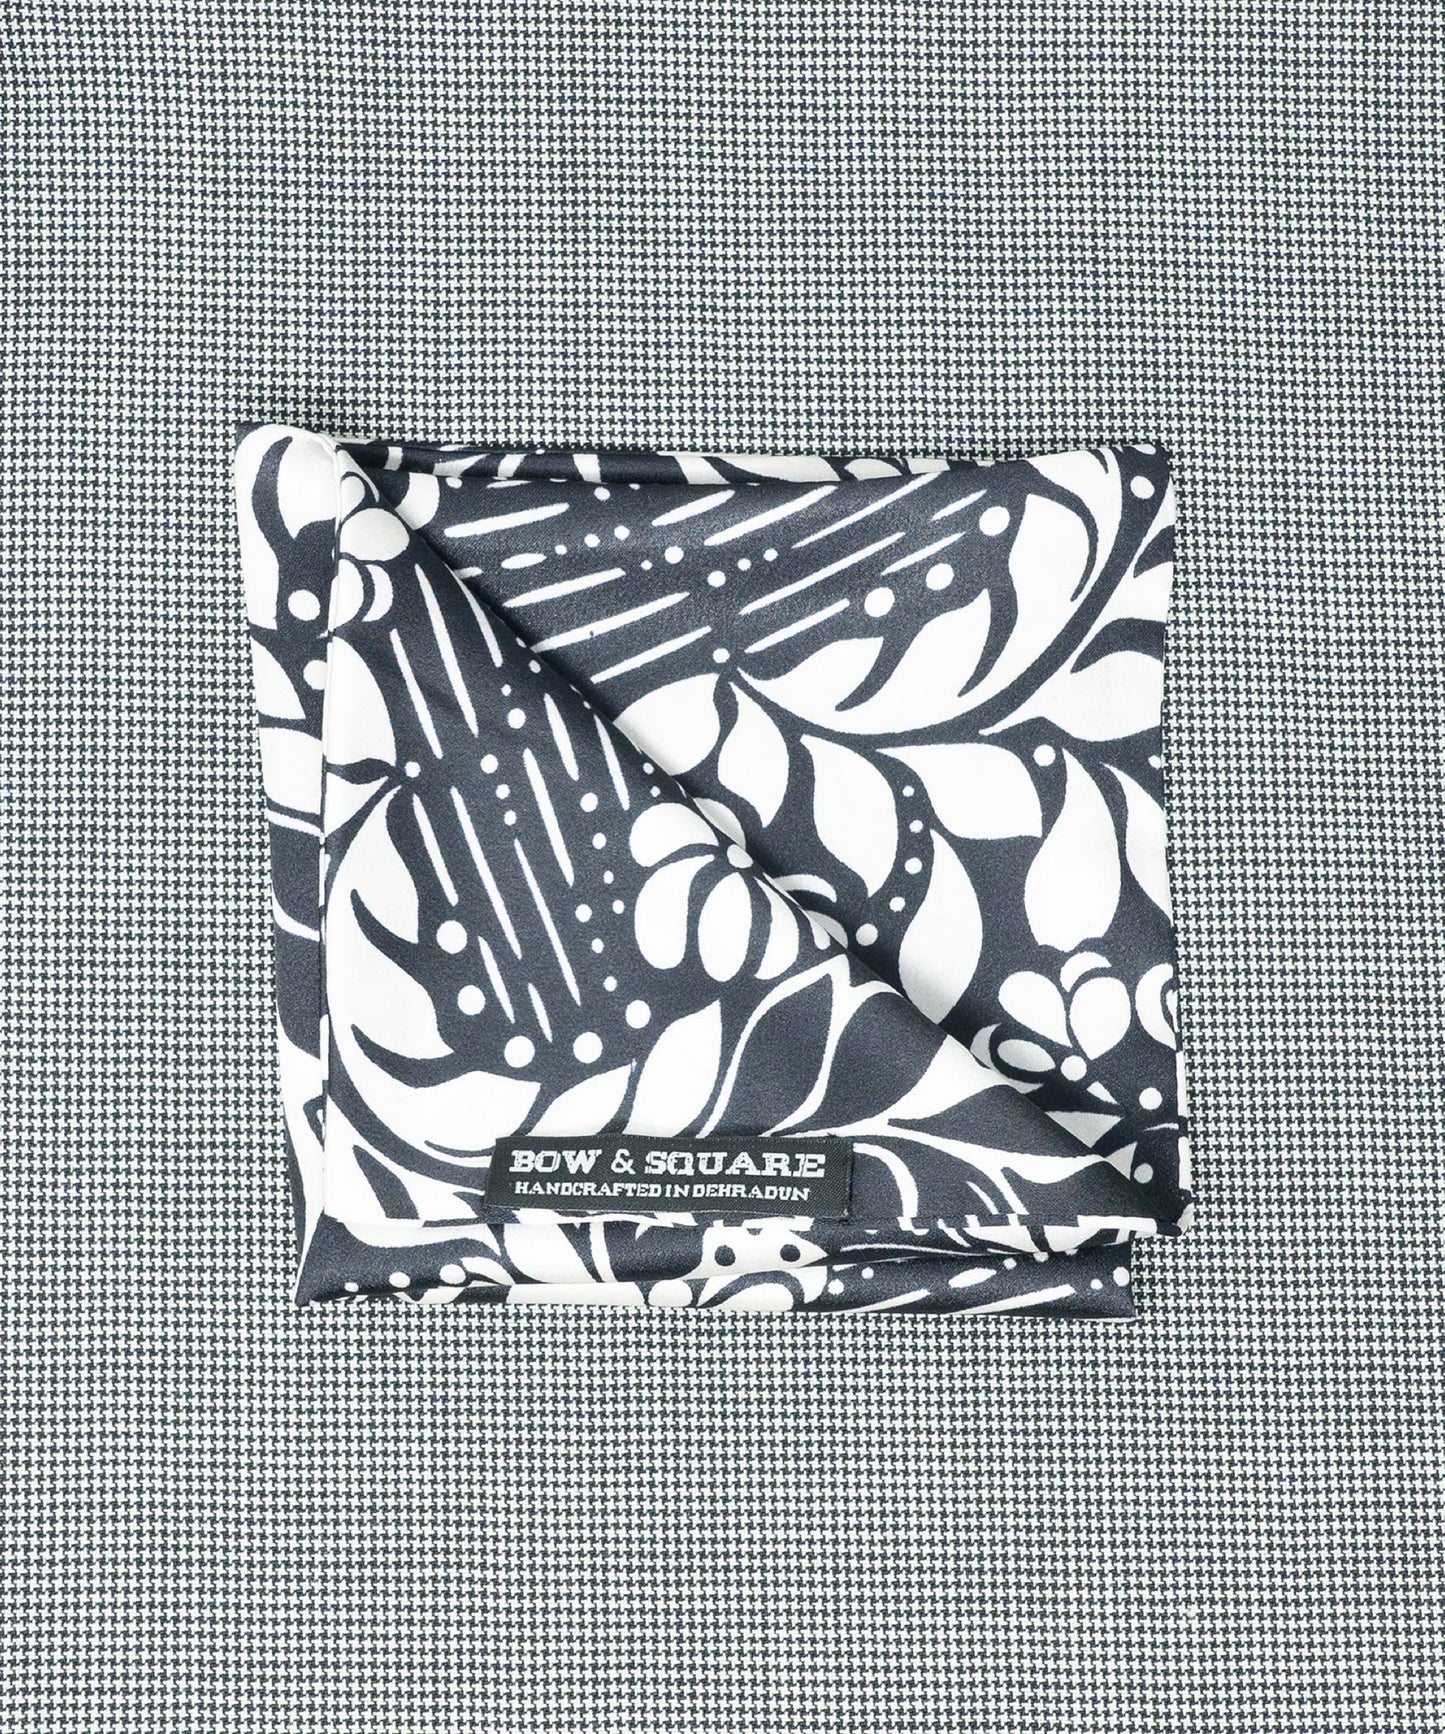 Monochrome Floral Black Pocket Square